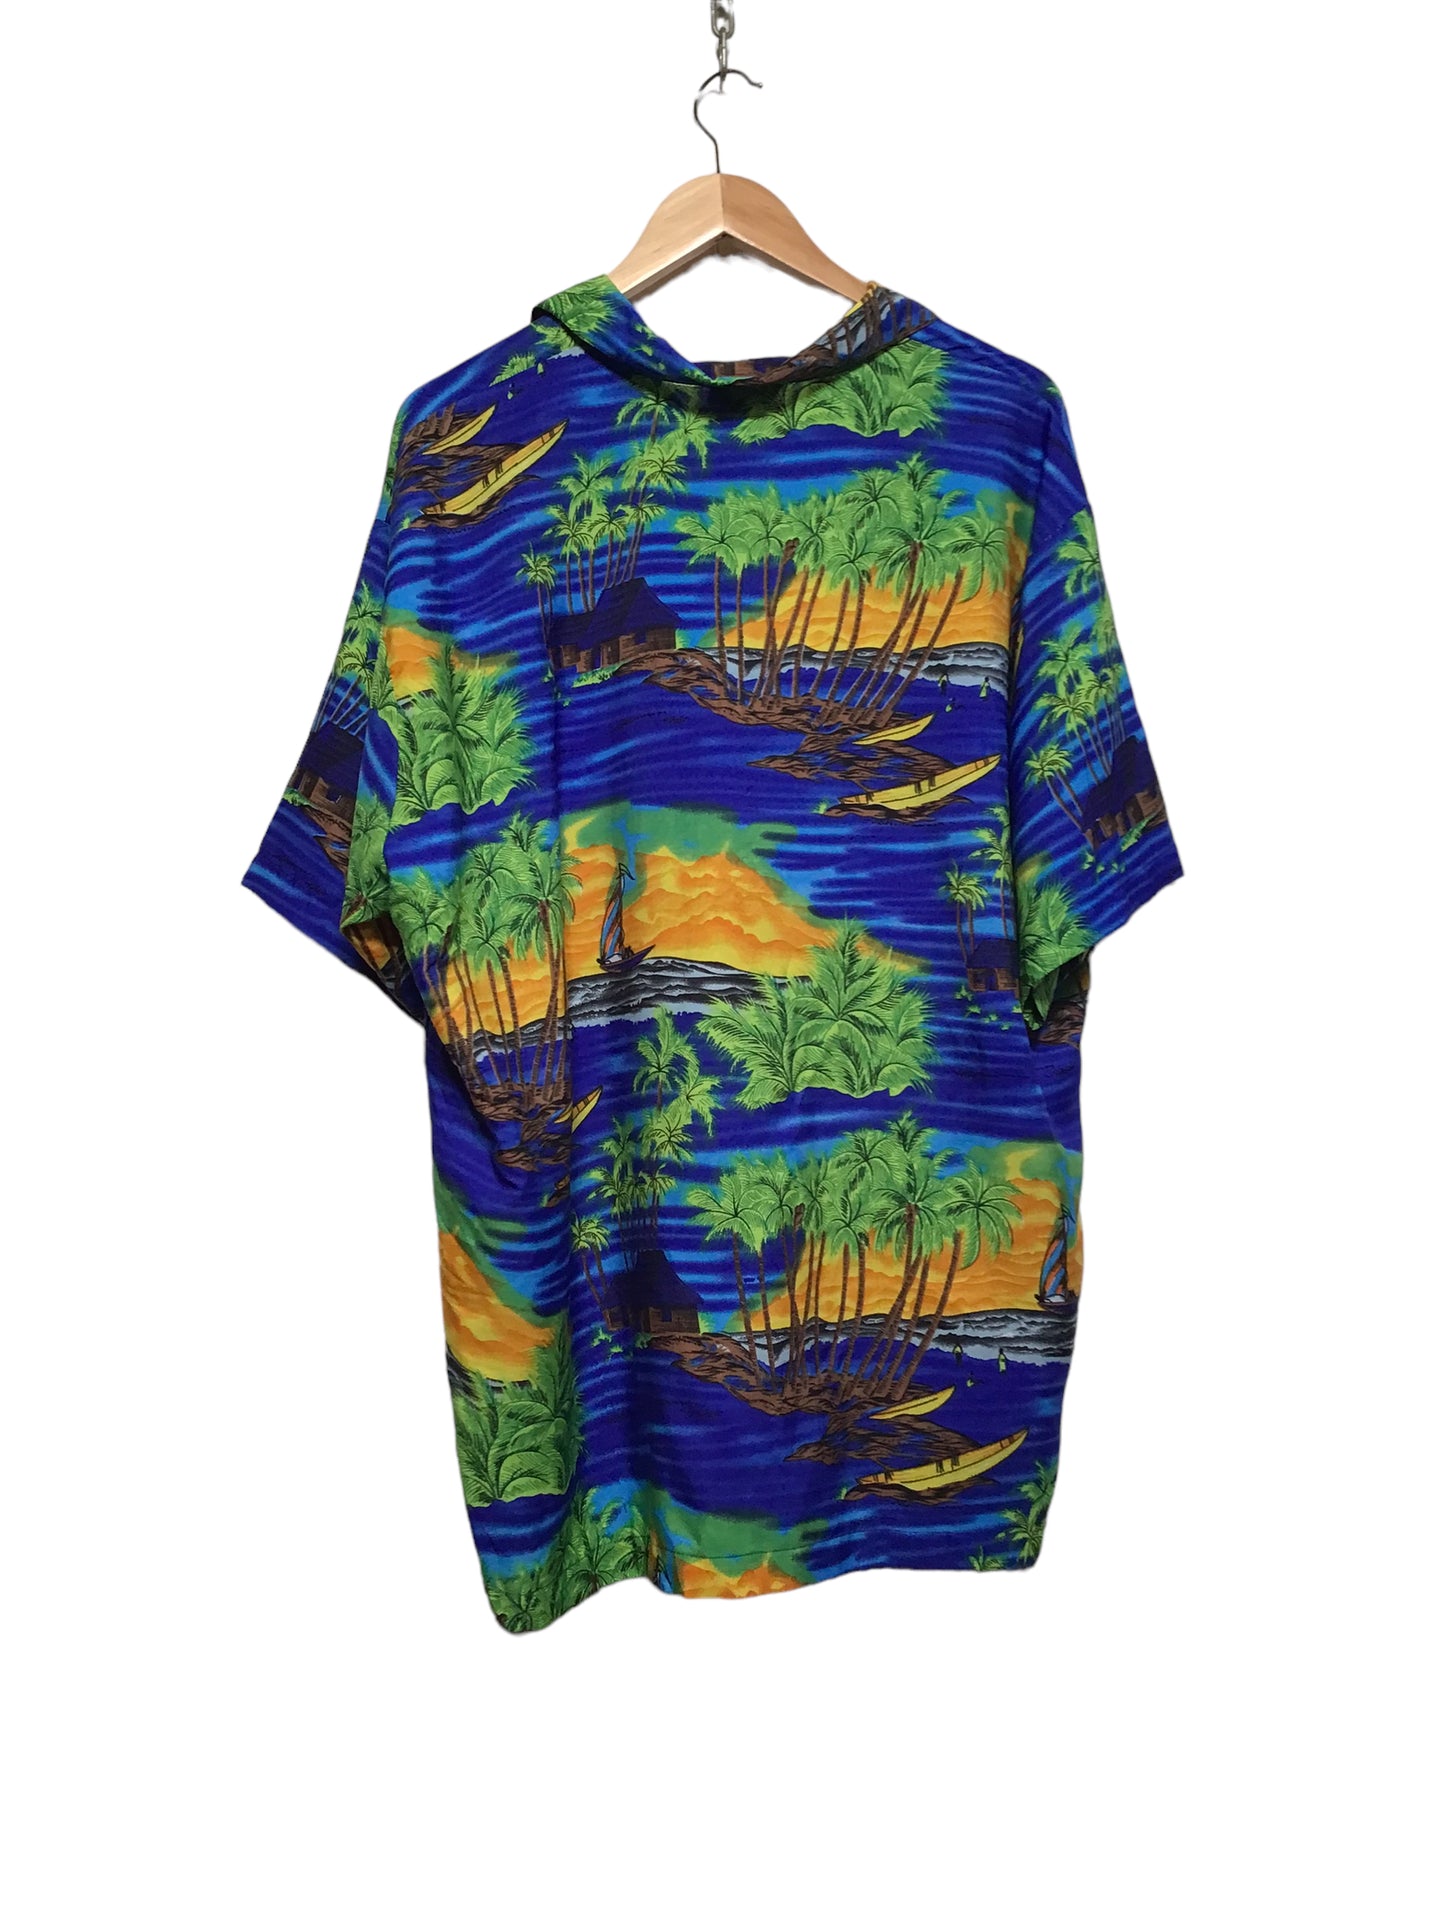 In Gear Tropical Island Shirt (Size XL)